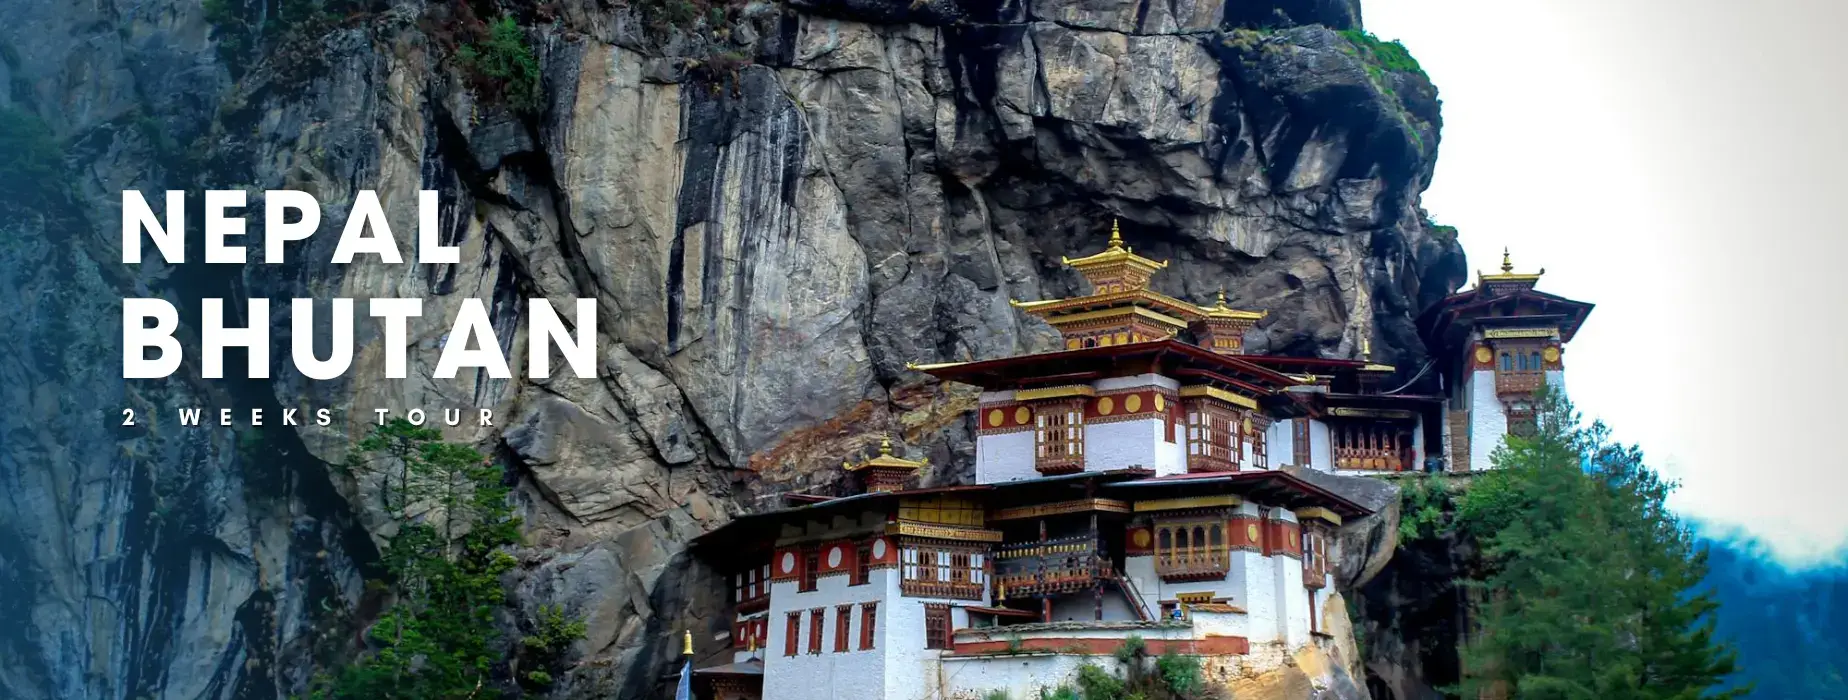 Nepal Bhutan 2 Weeks Tour